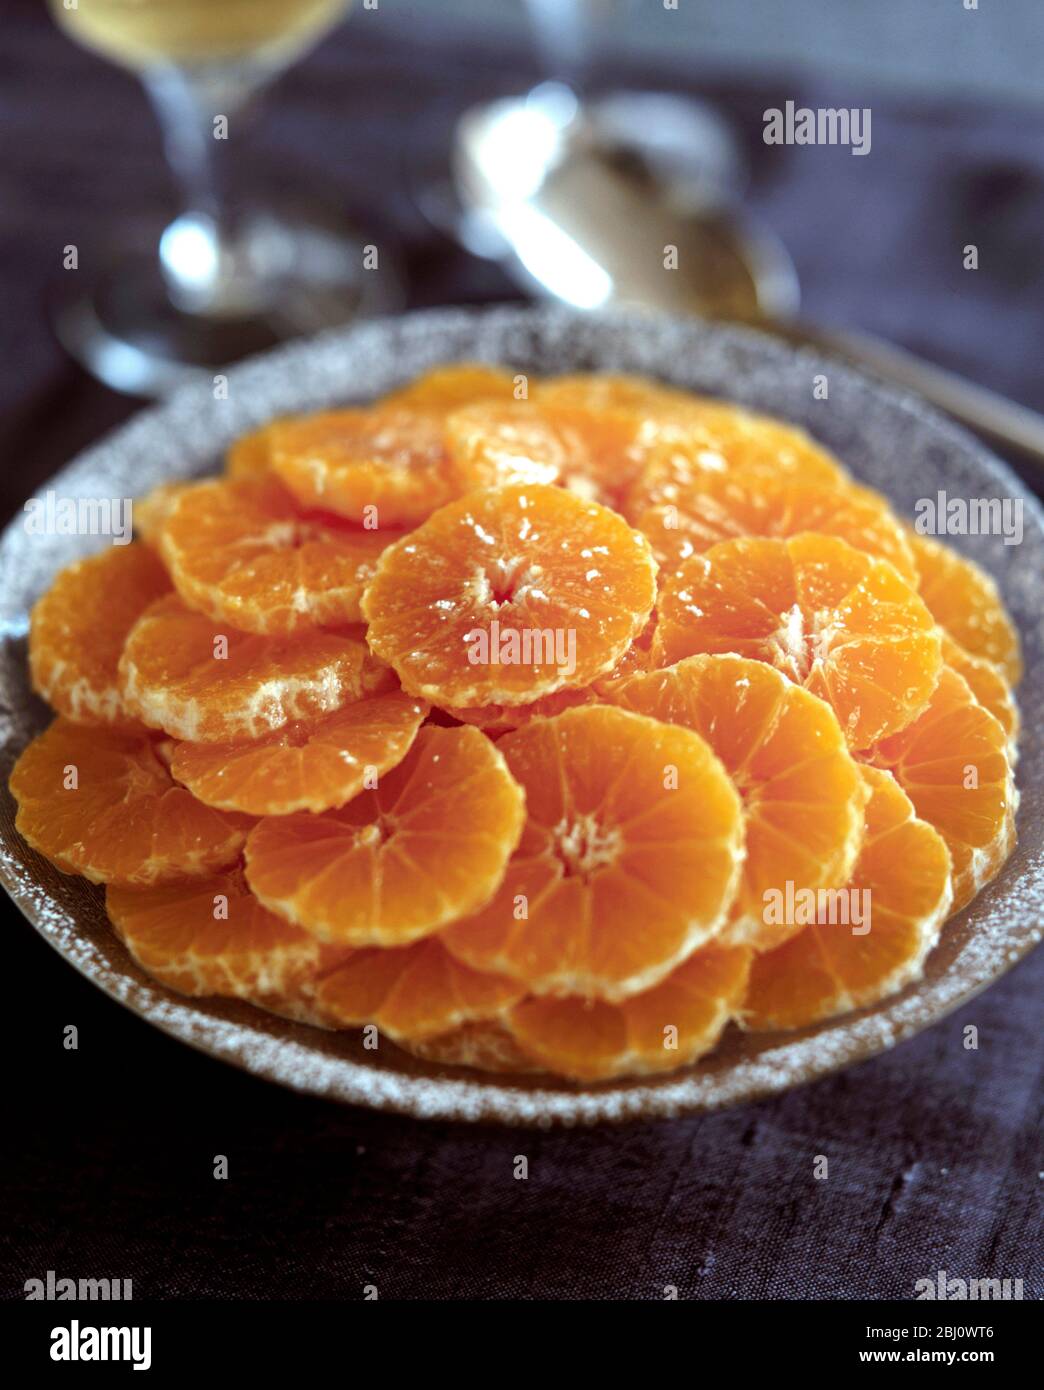 Dish of sliced oranges - Stock Photo